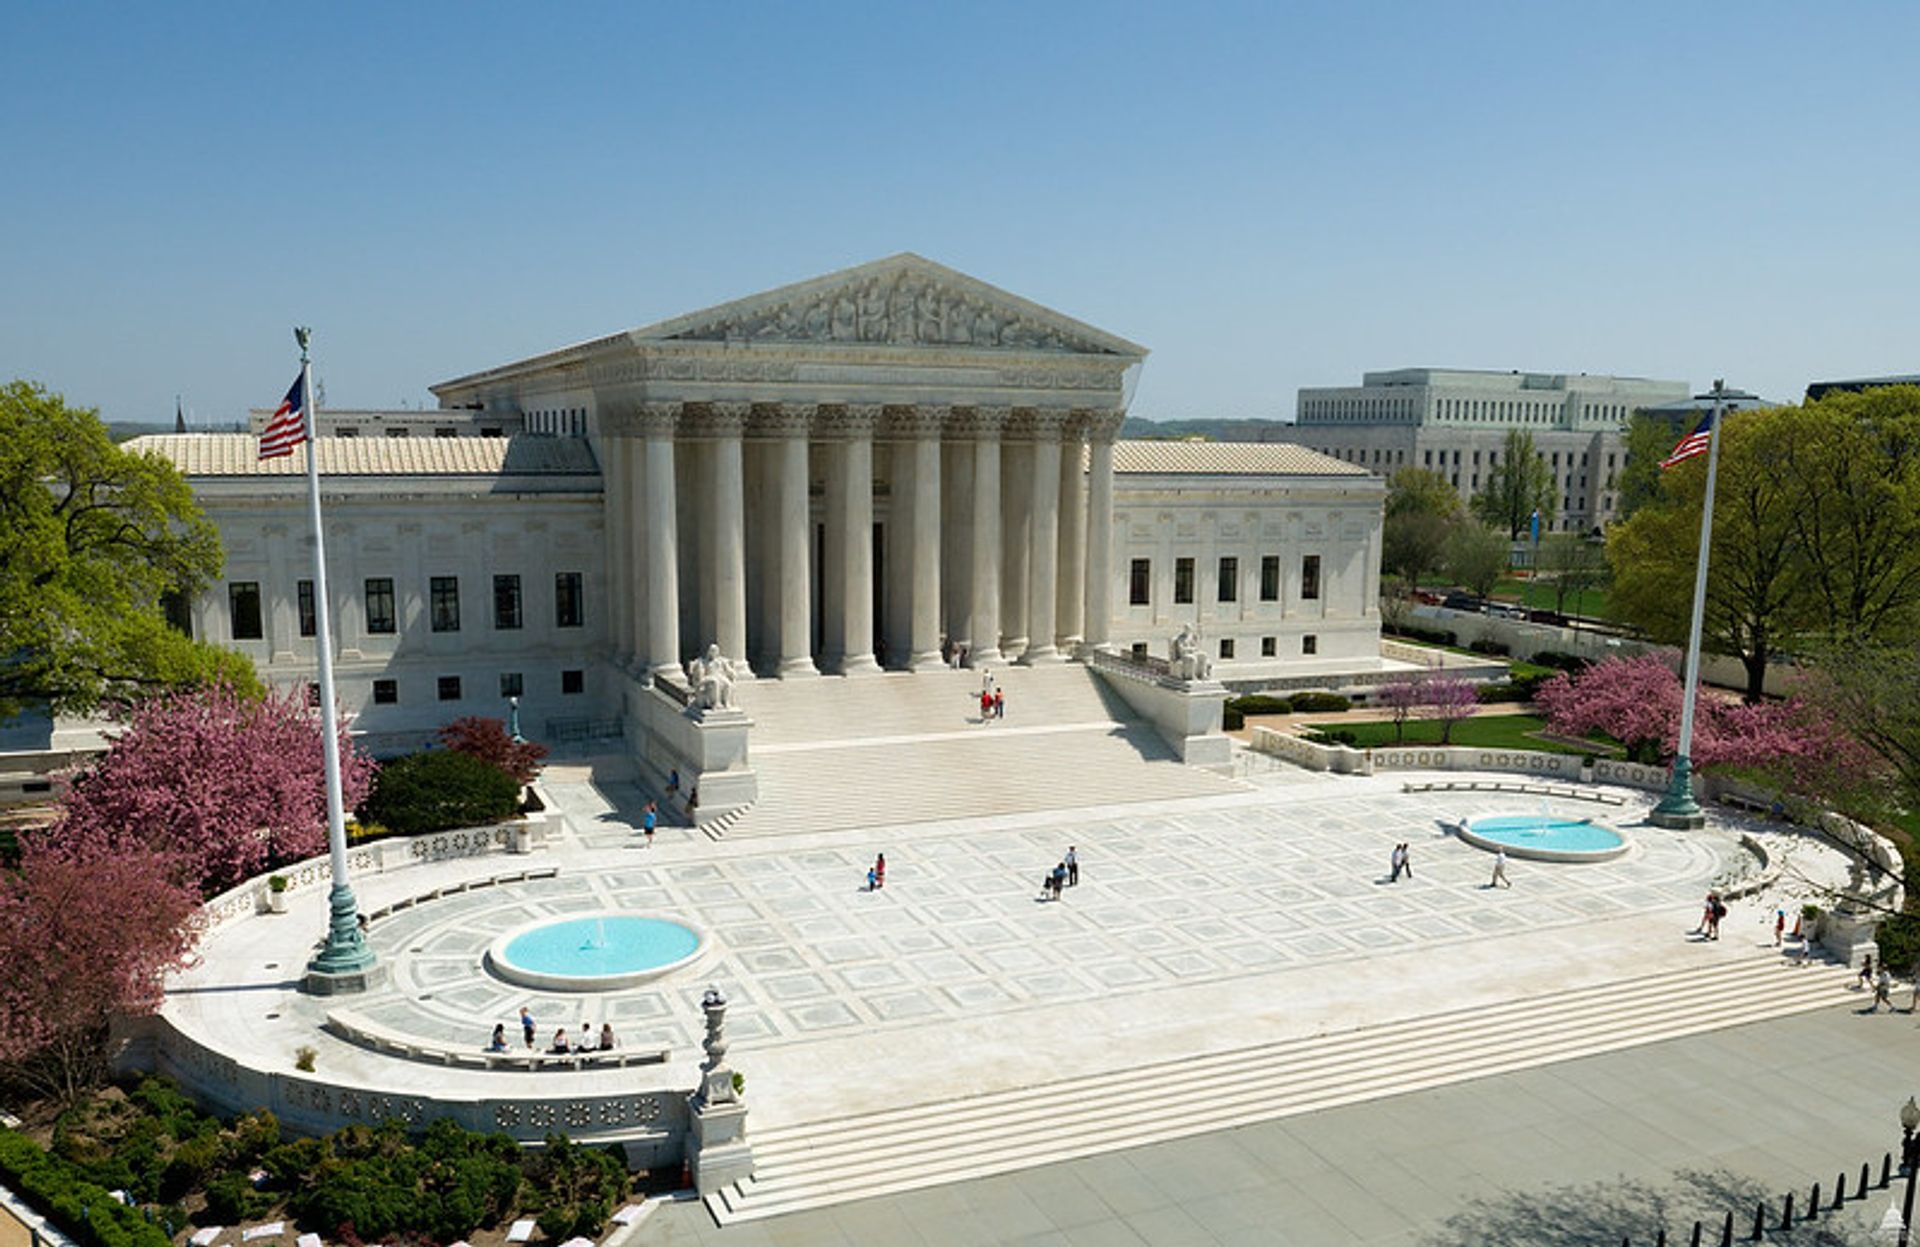 The US Supreme Court building Via USCourt Flickr